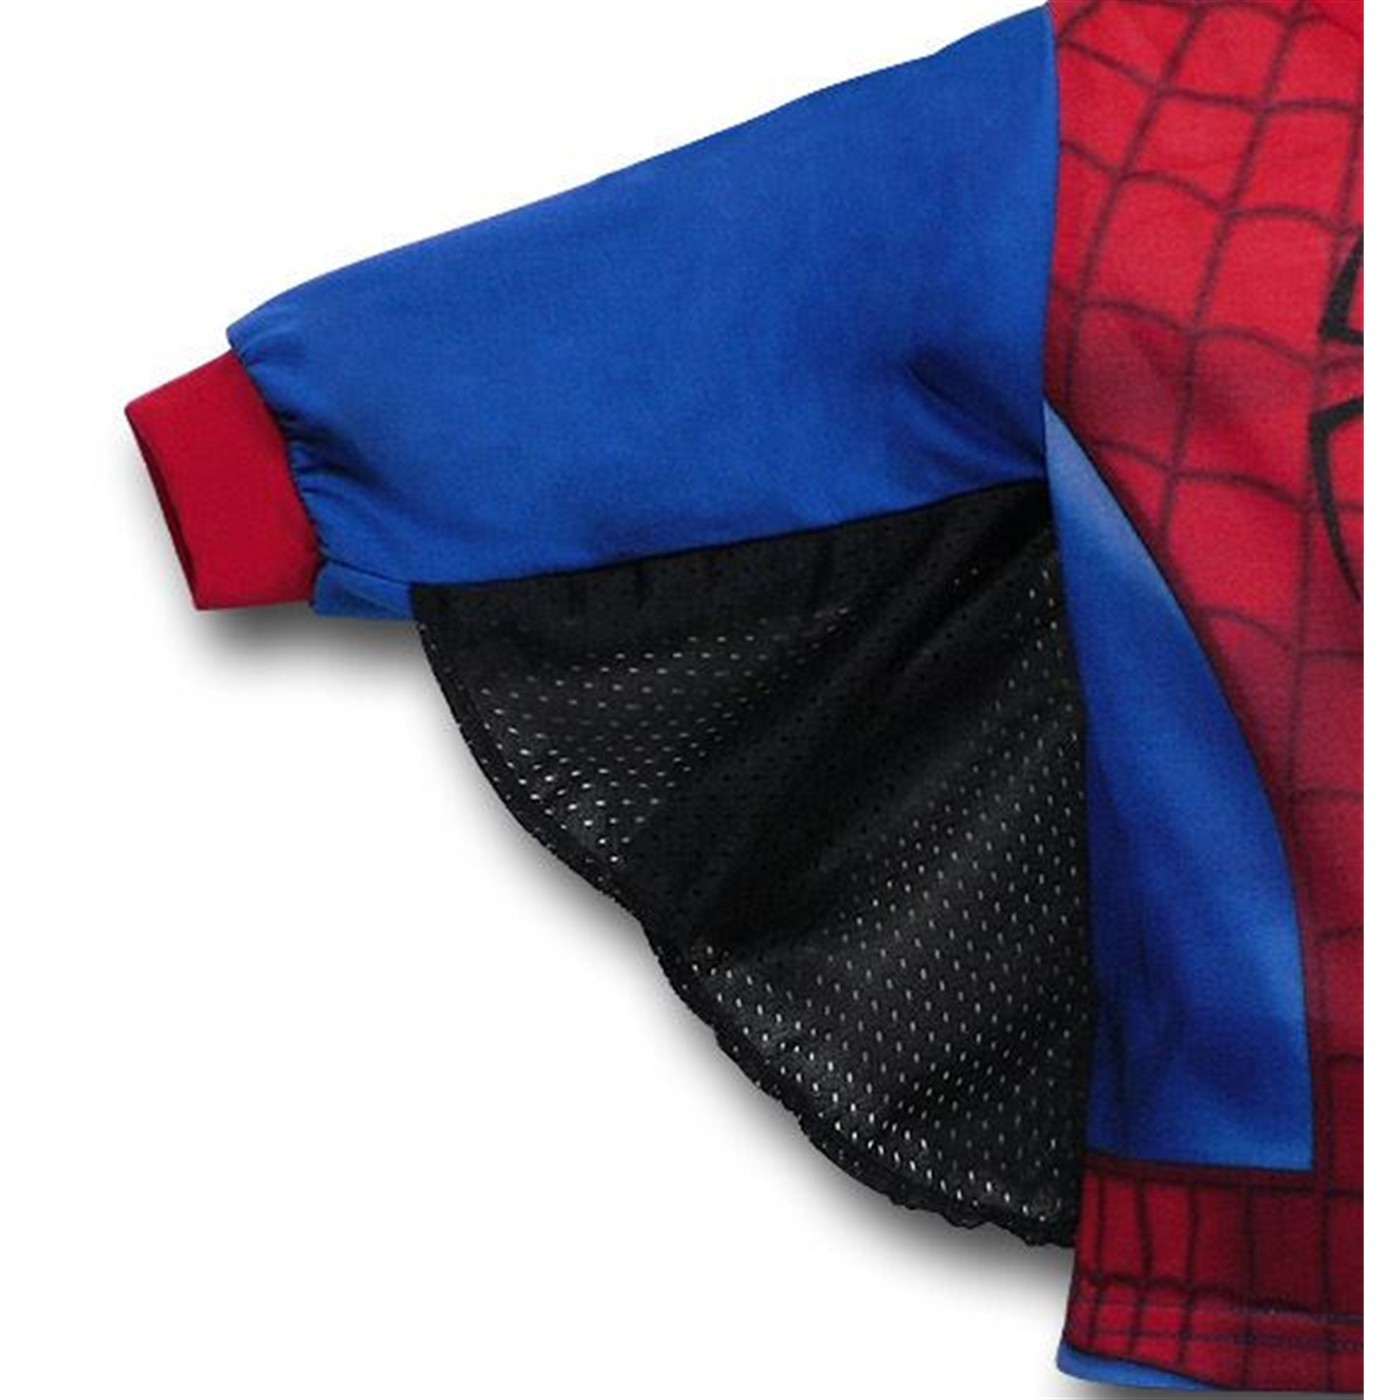 Spiderman Kids Costume Pajama Set